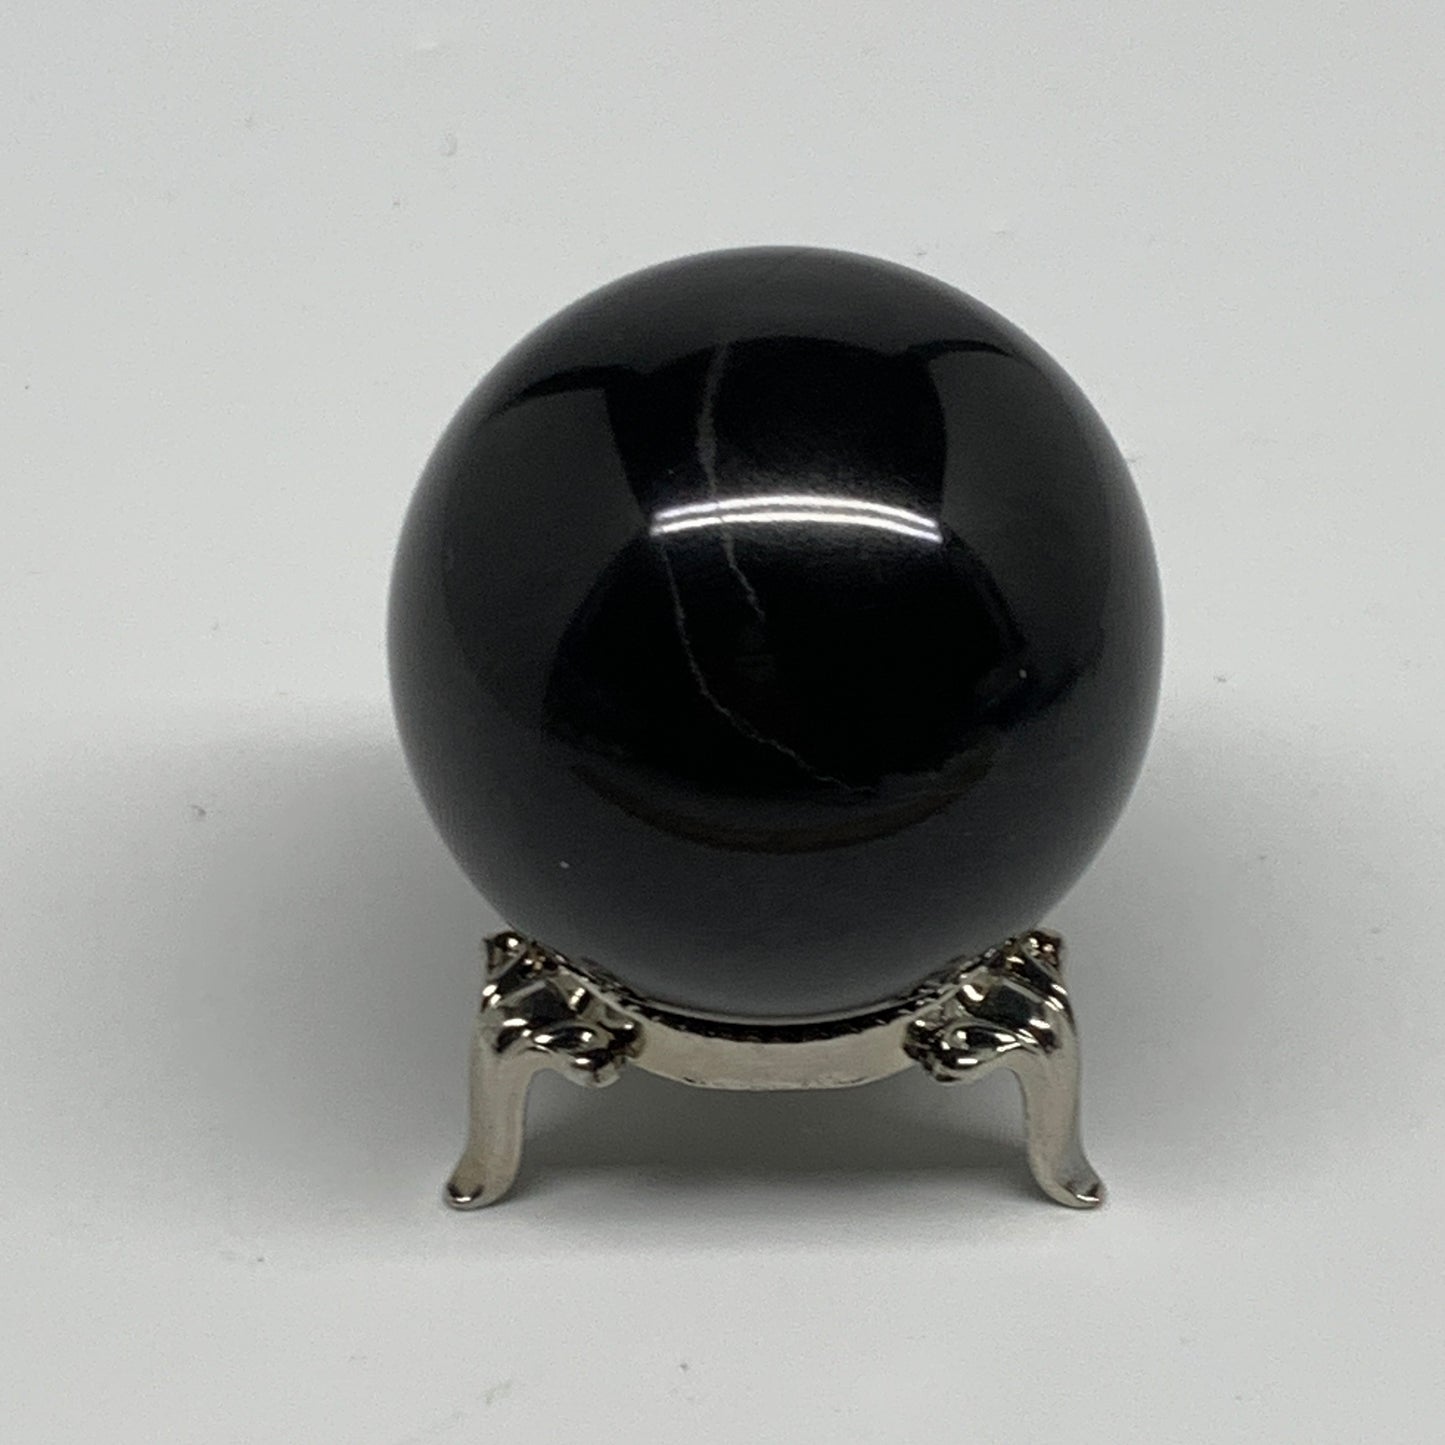 162.2g, 1.8"(47mm), Natural Black Jasper Sphere Ball Gemstone @India, B27915